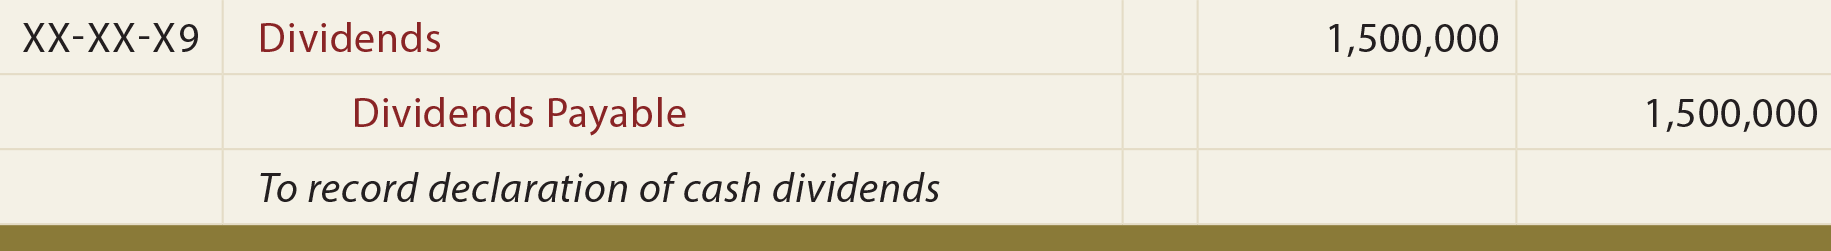 Cash Dividend General Journal Entry - To record declaration of cash dividends